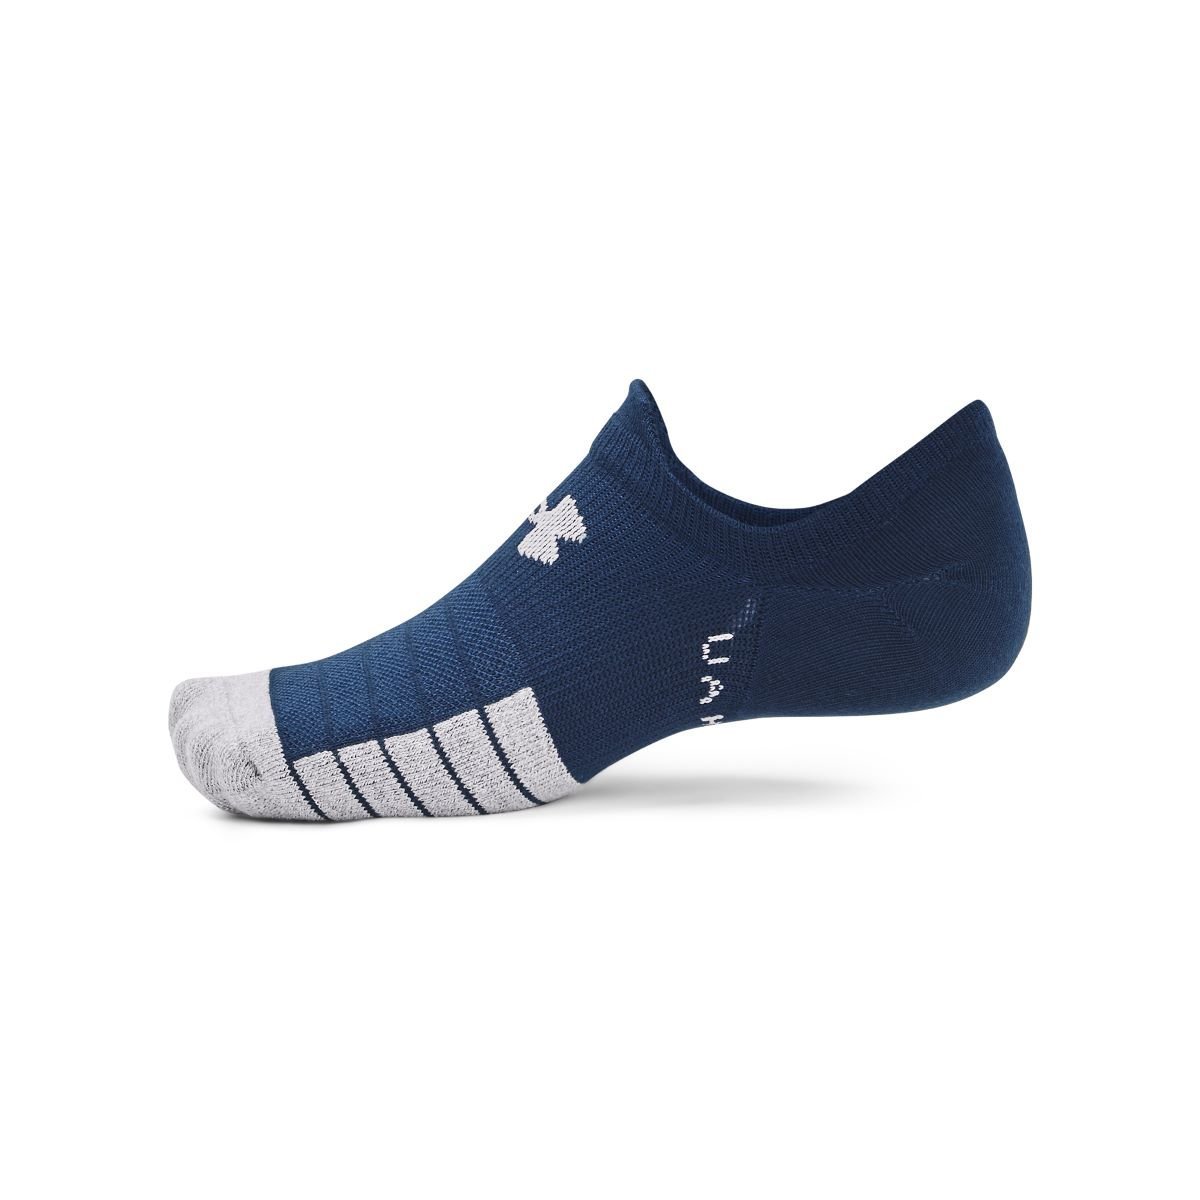 Ponožky Under Armour Heatgear UltraLowTab 3ks - modrá